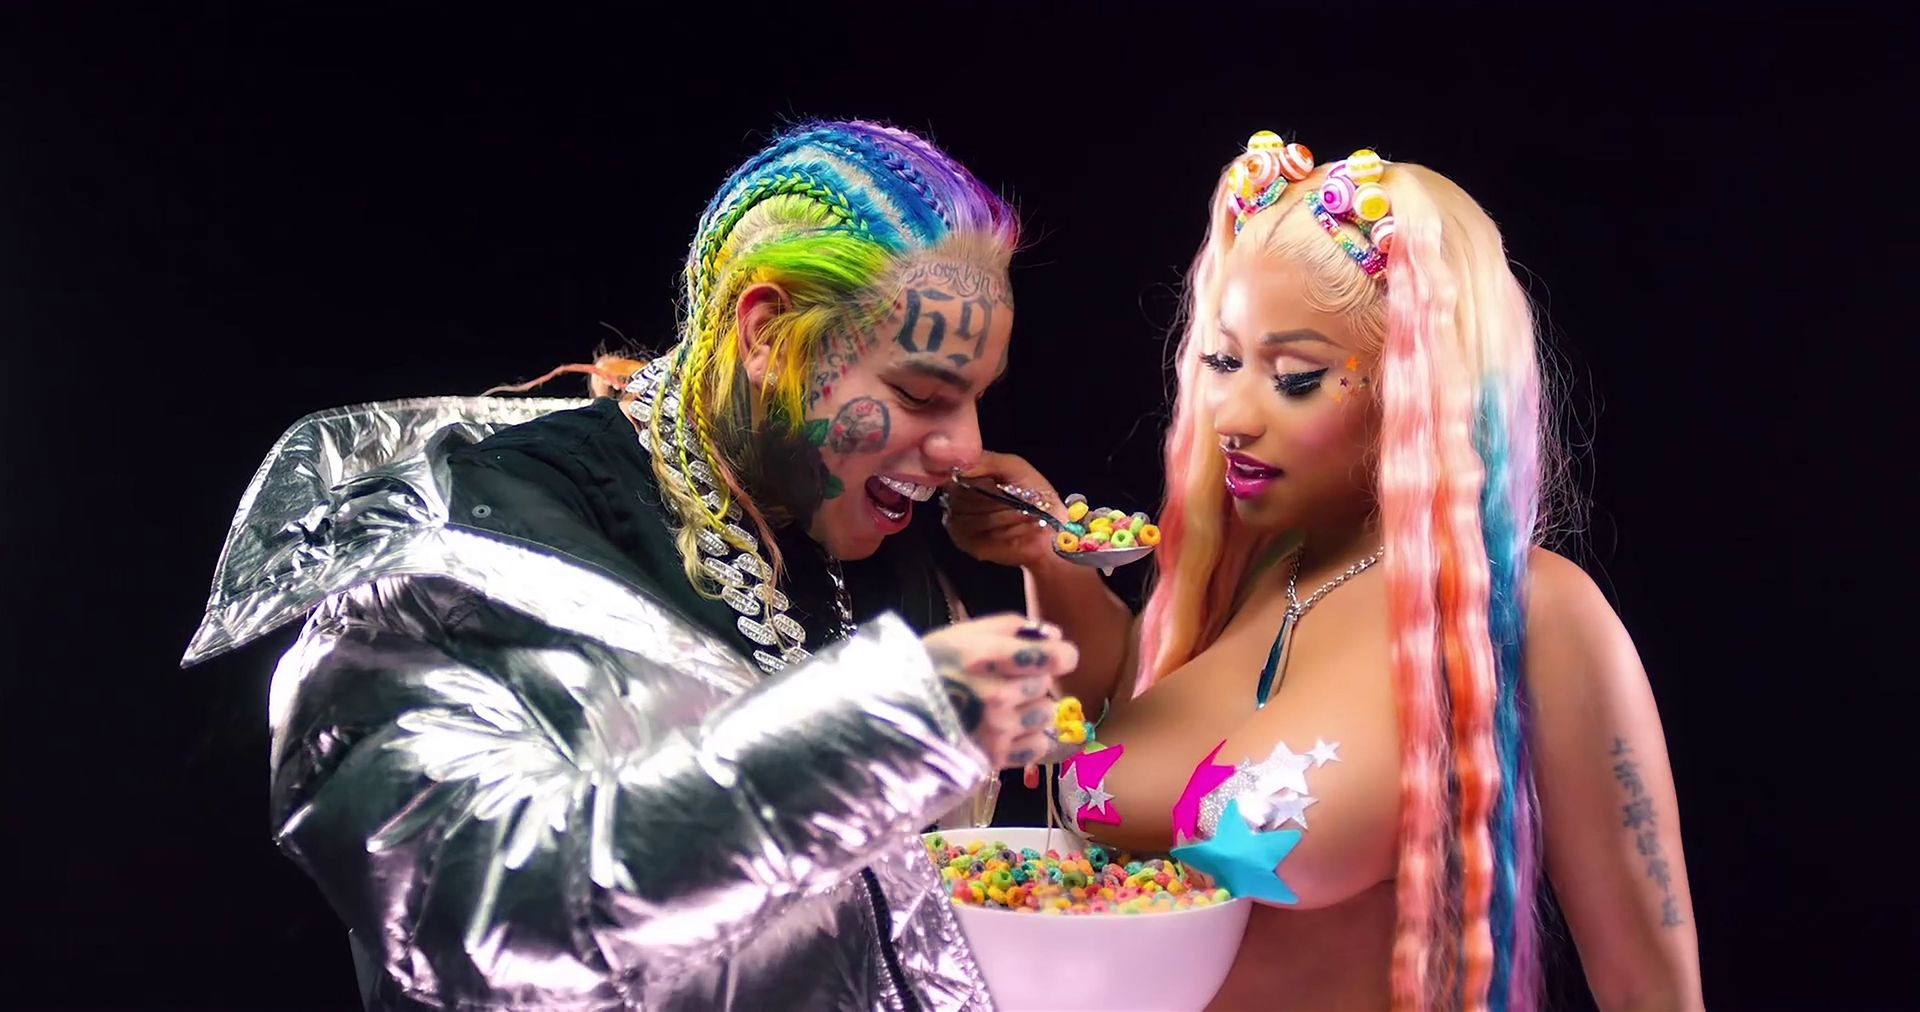 Nicki Minaj Shaking Her Big Boobs in Front of the Camera